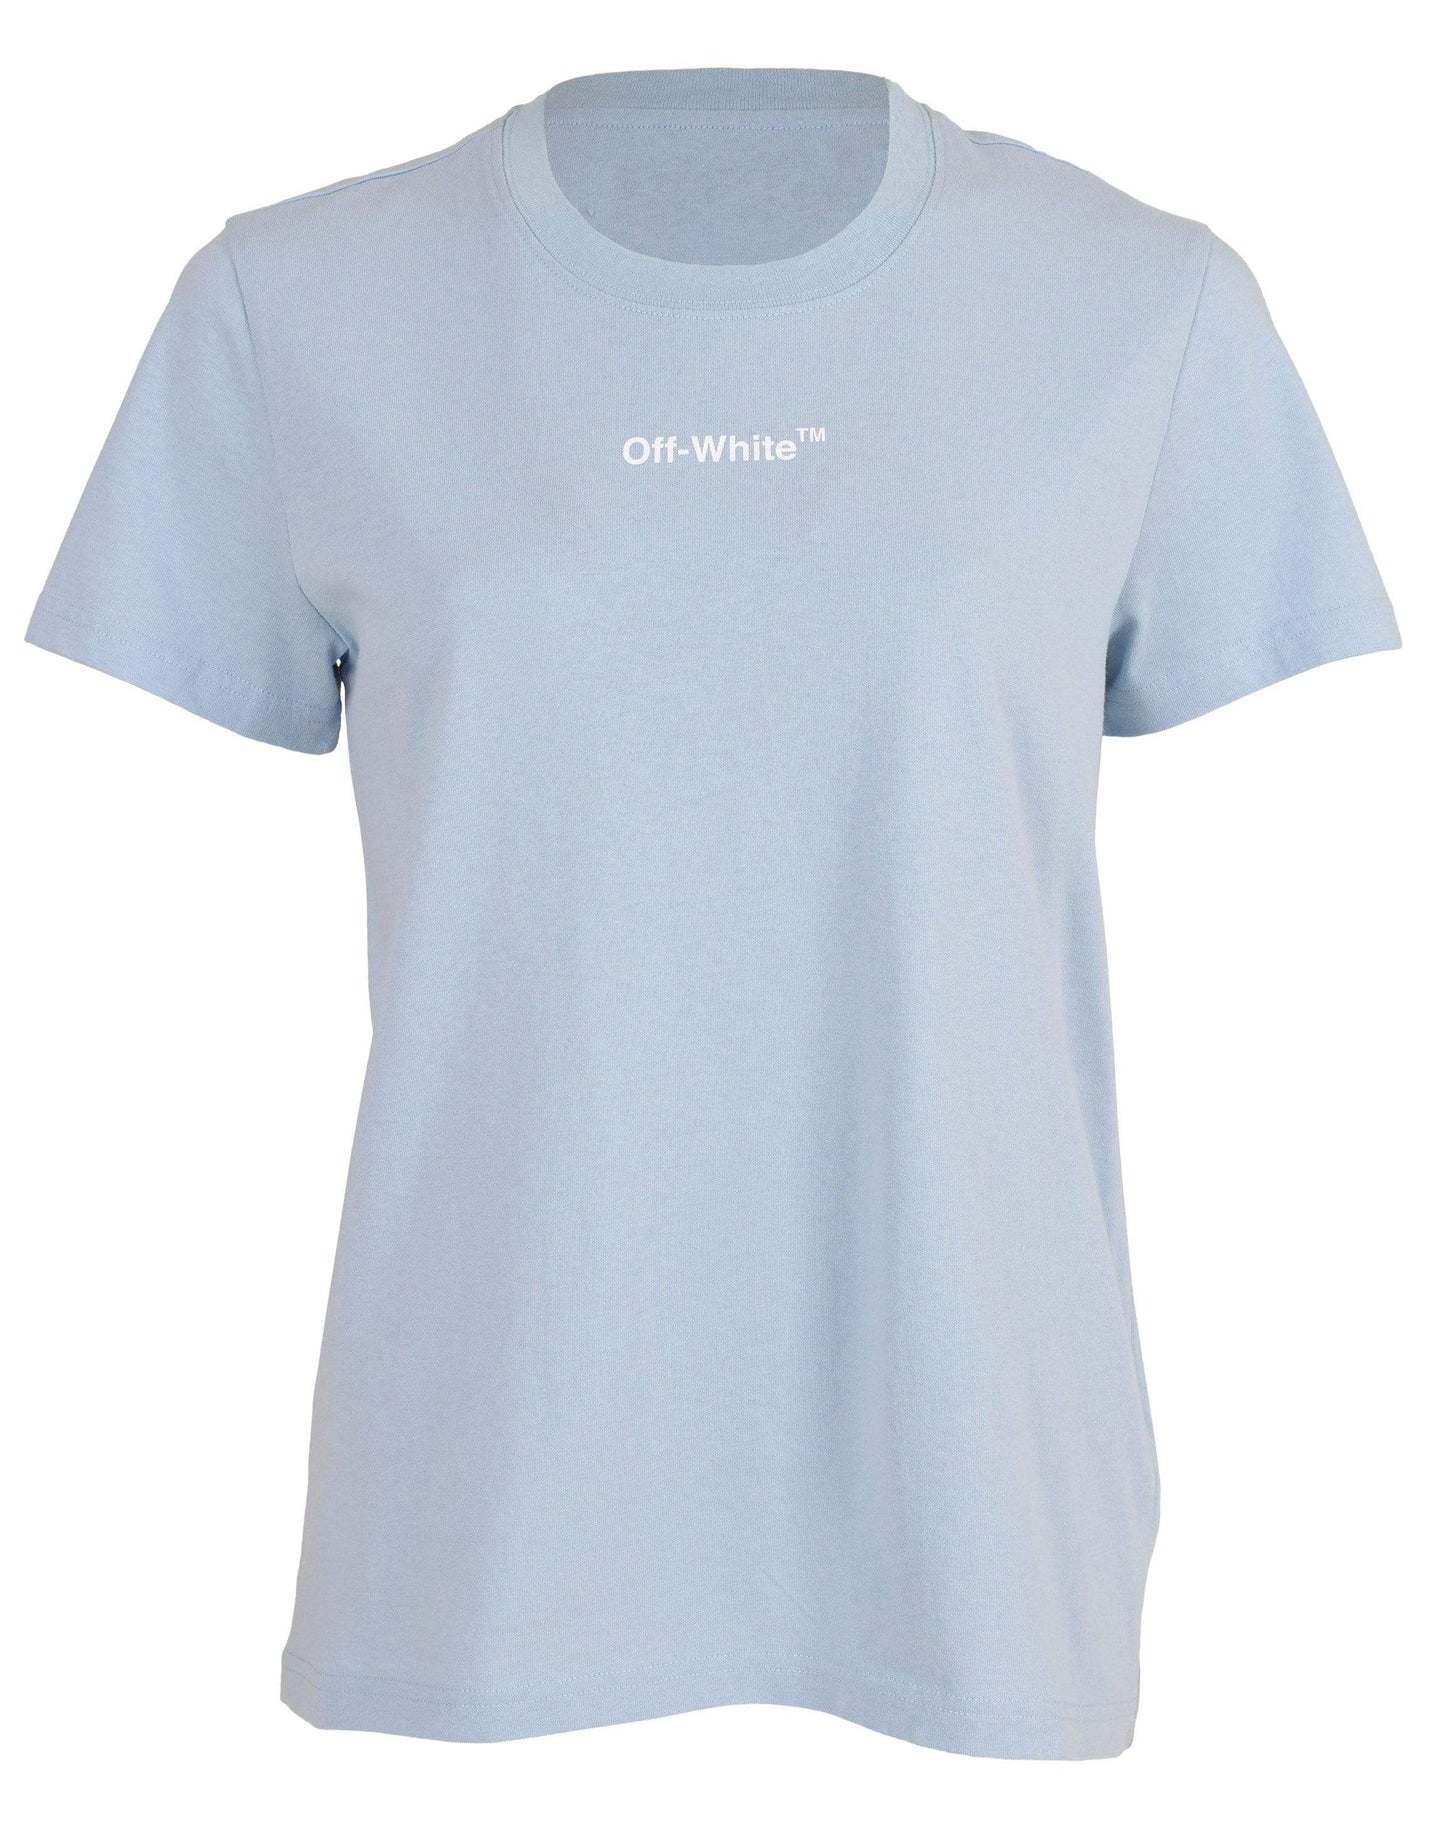 OFF-WHITE-Arrows Sketch T-Shirt-